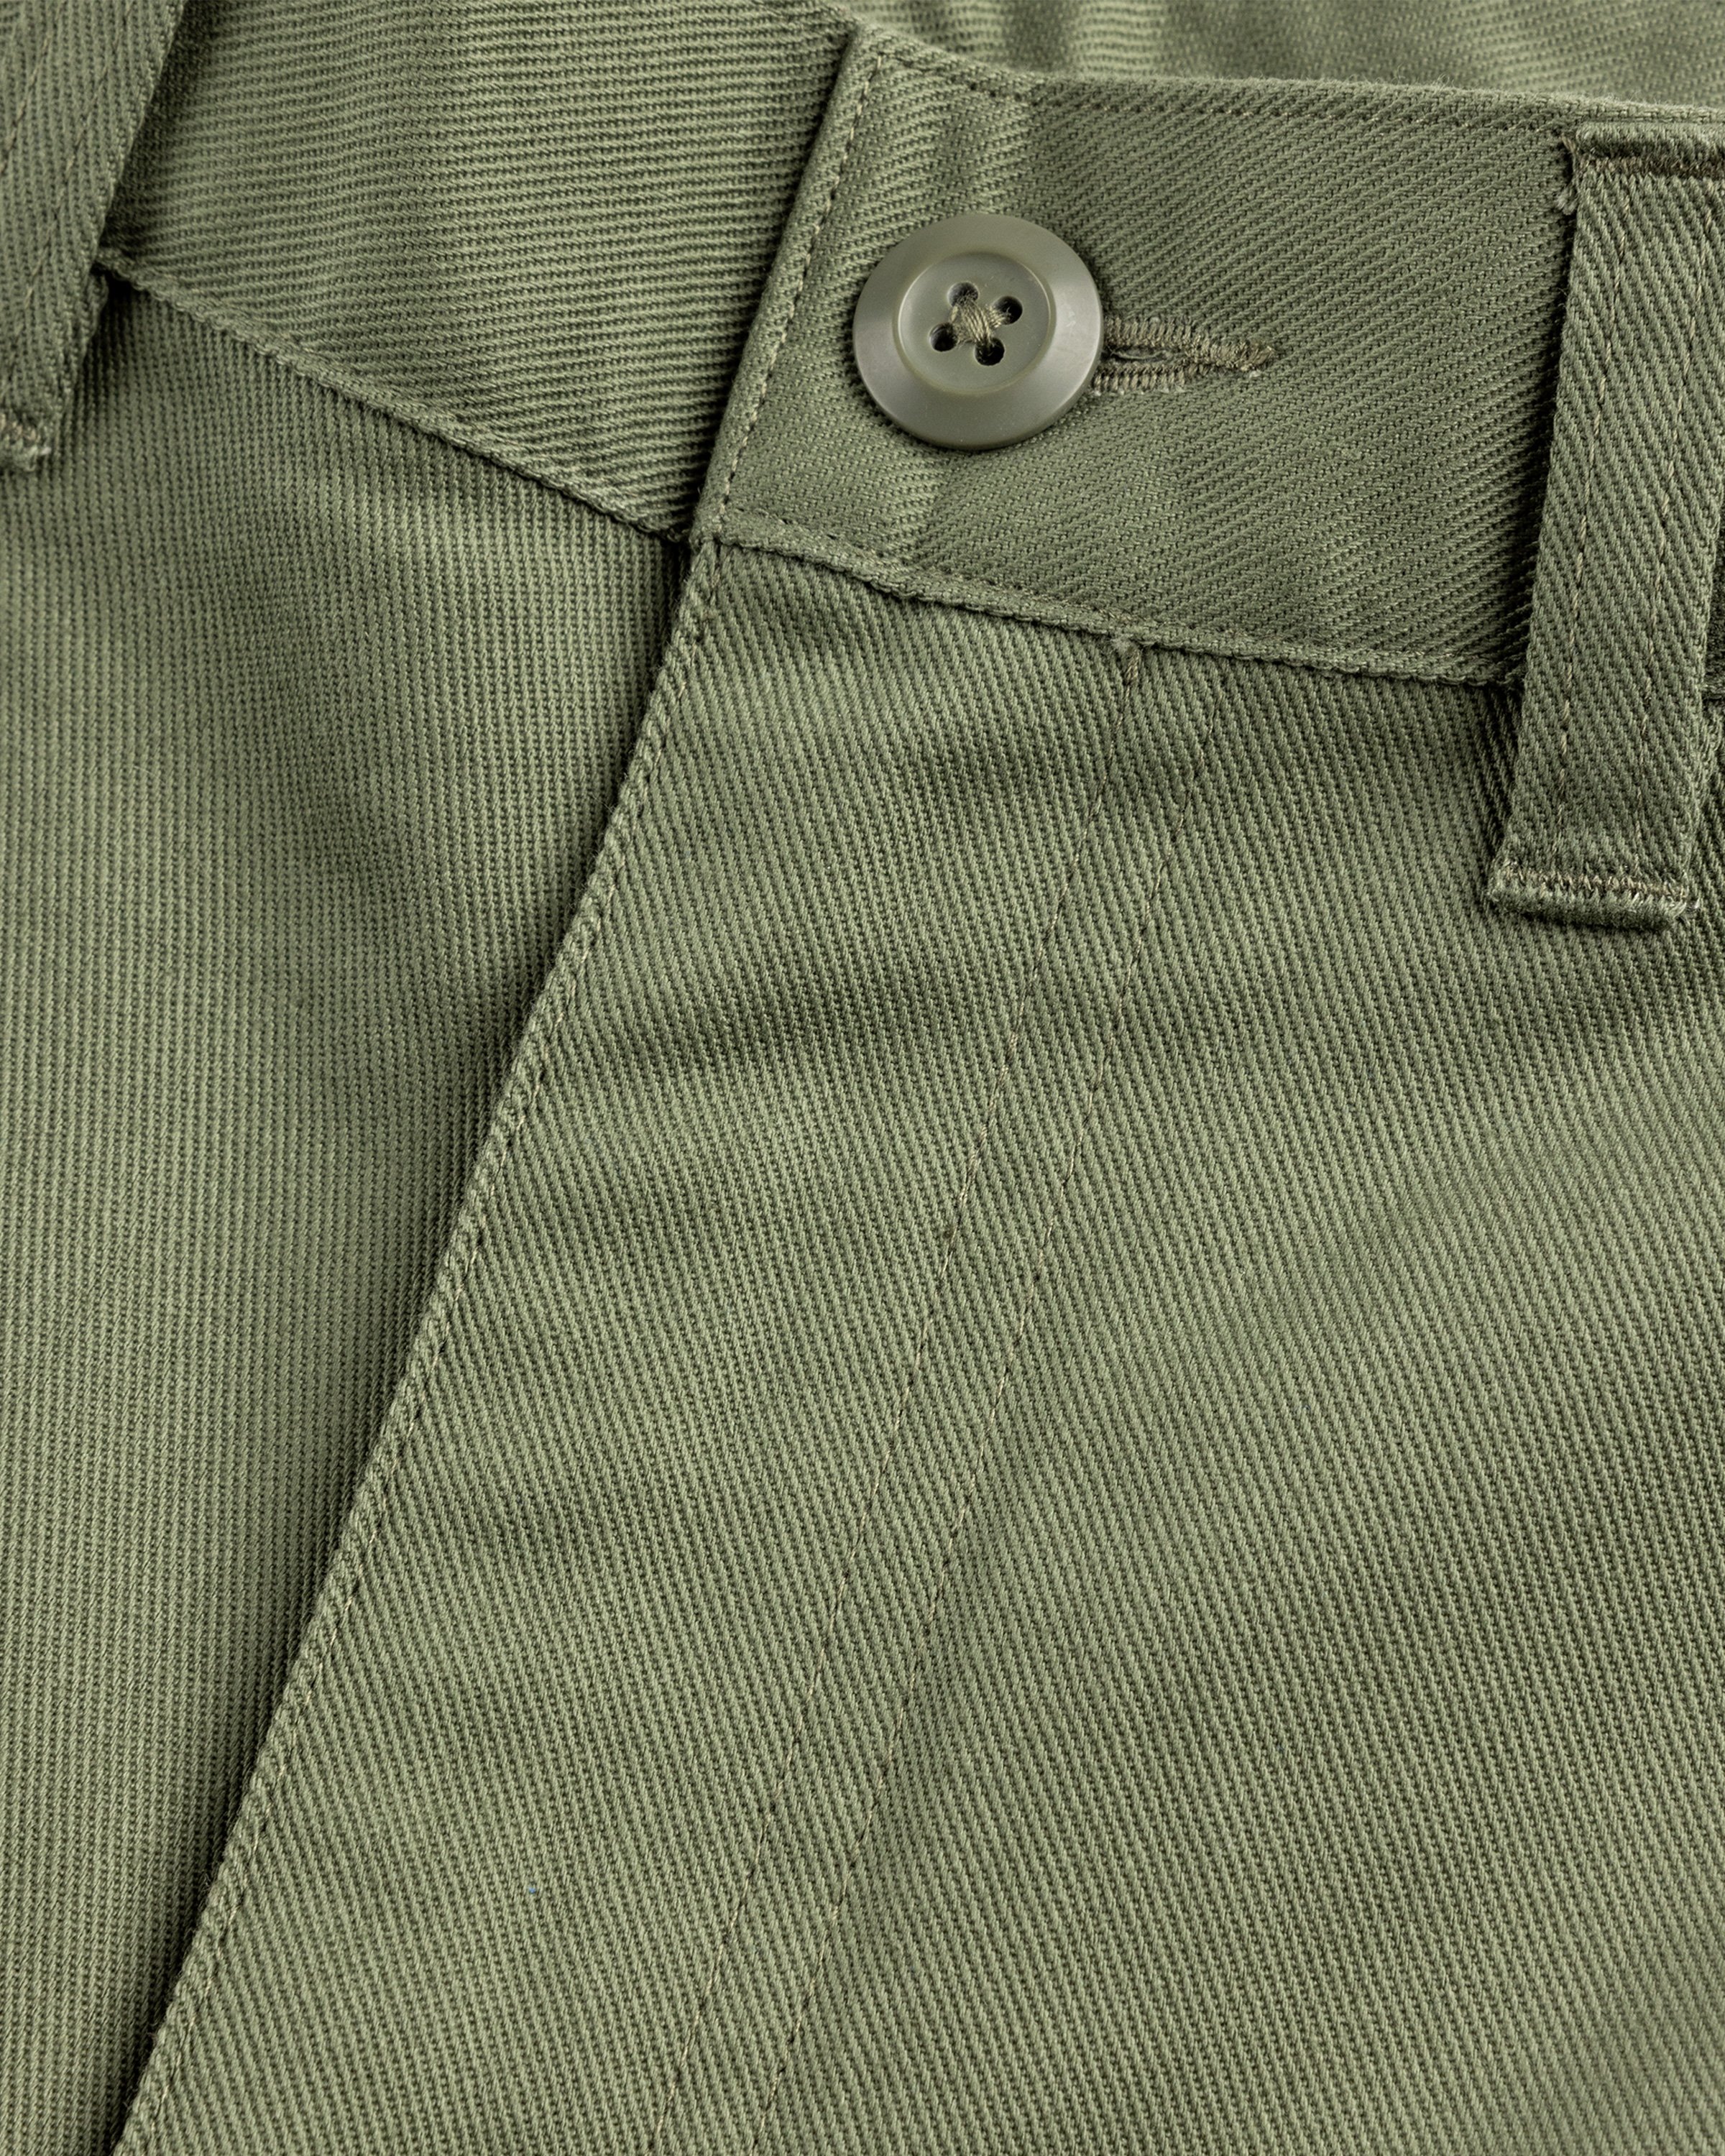 Carhartt WIP - Midland Pant Dollar Green - Clothing - Green - Image 6